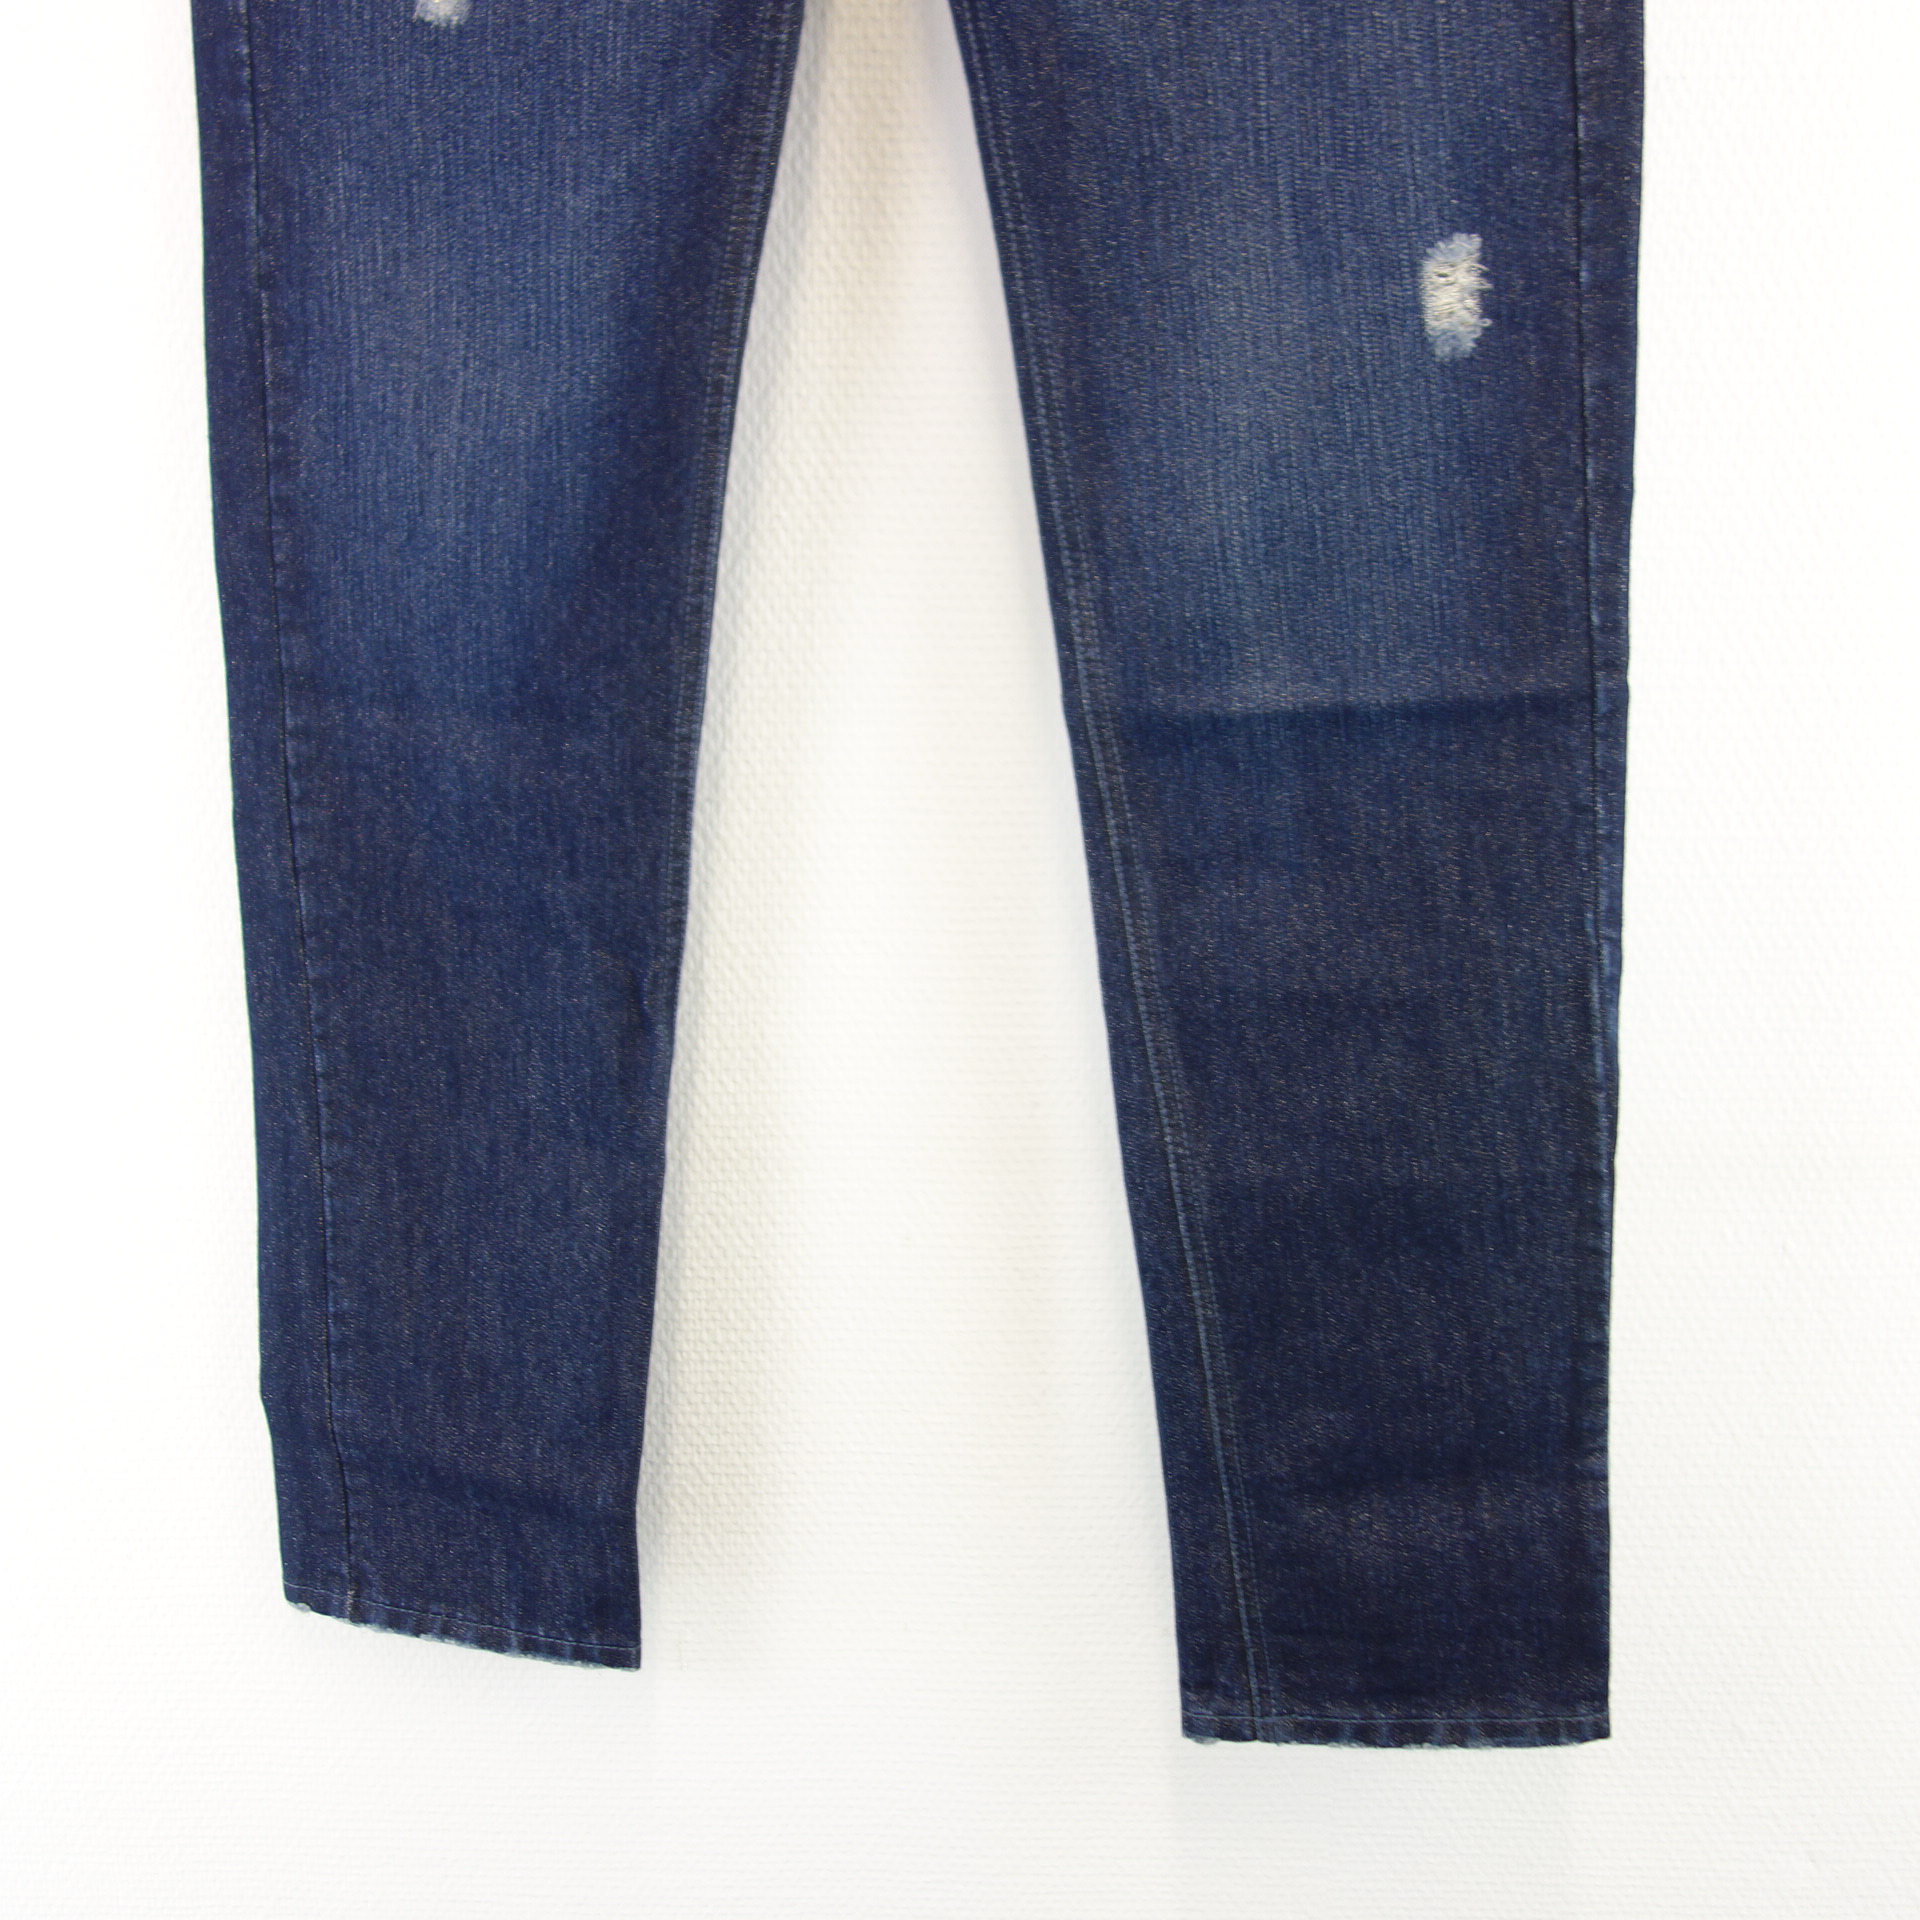 PG ENJOY Jeans Hose Blau Modell REVE Distressed Look Straight Glitzer